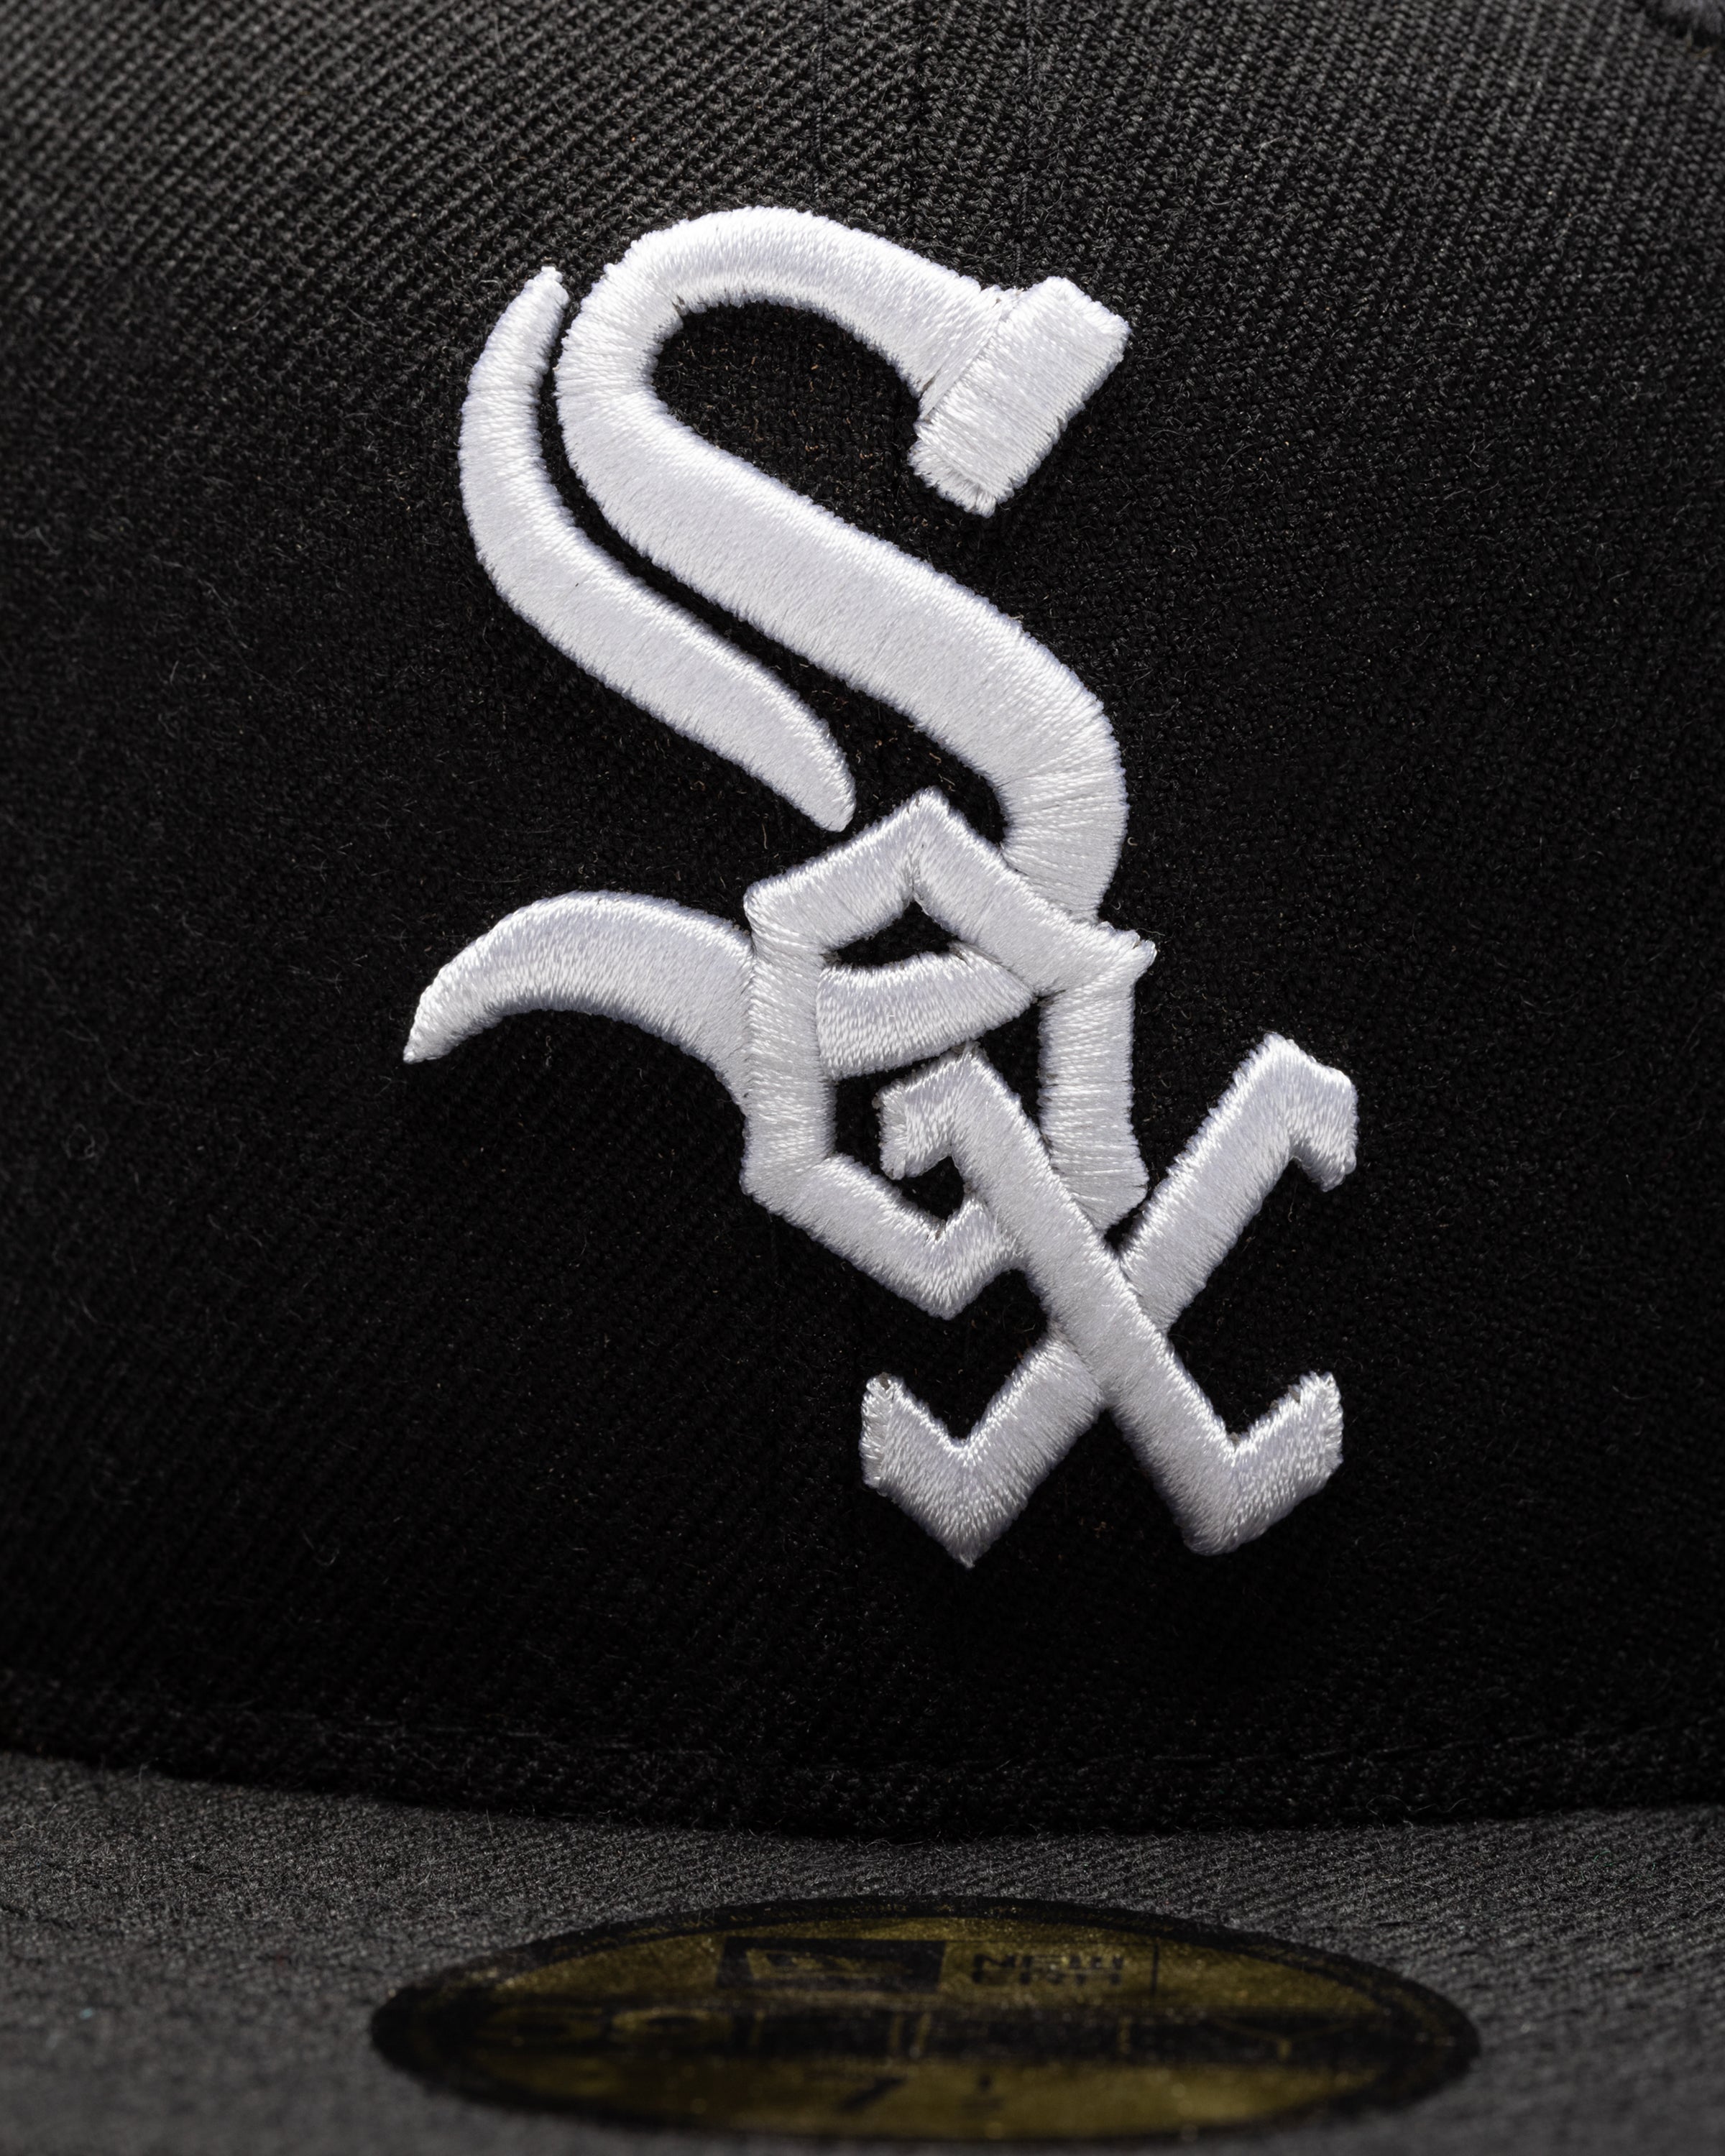 MLB - Chicago White Sox Heavy Duty Aluminum Color Emblem